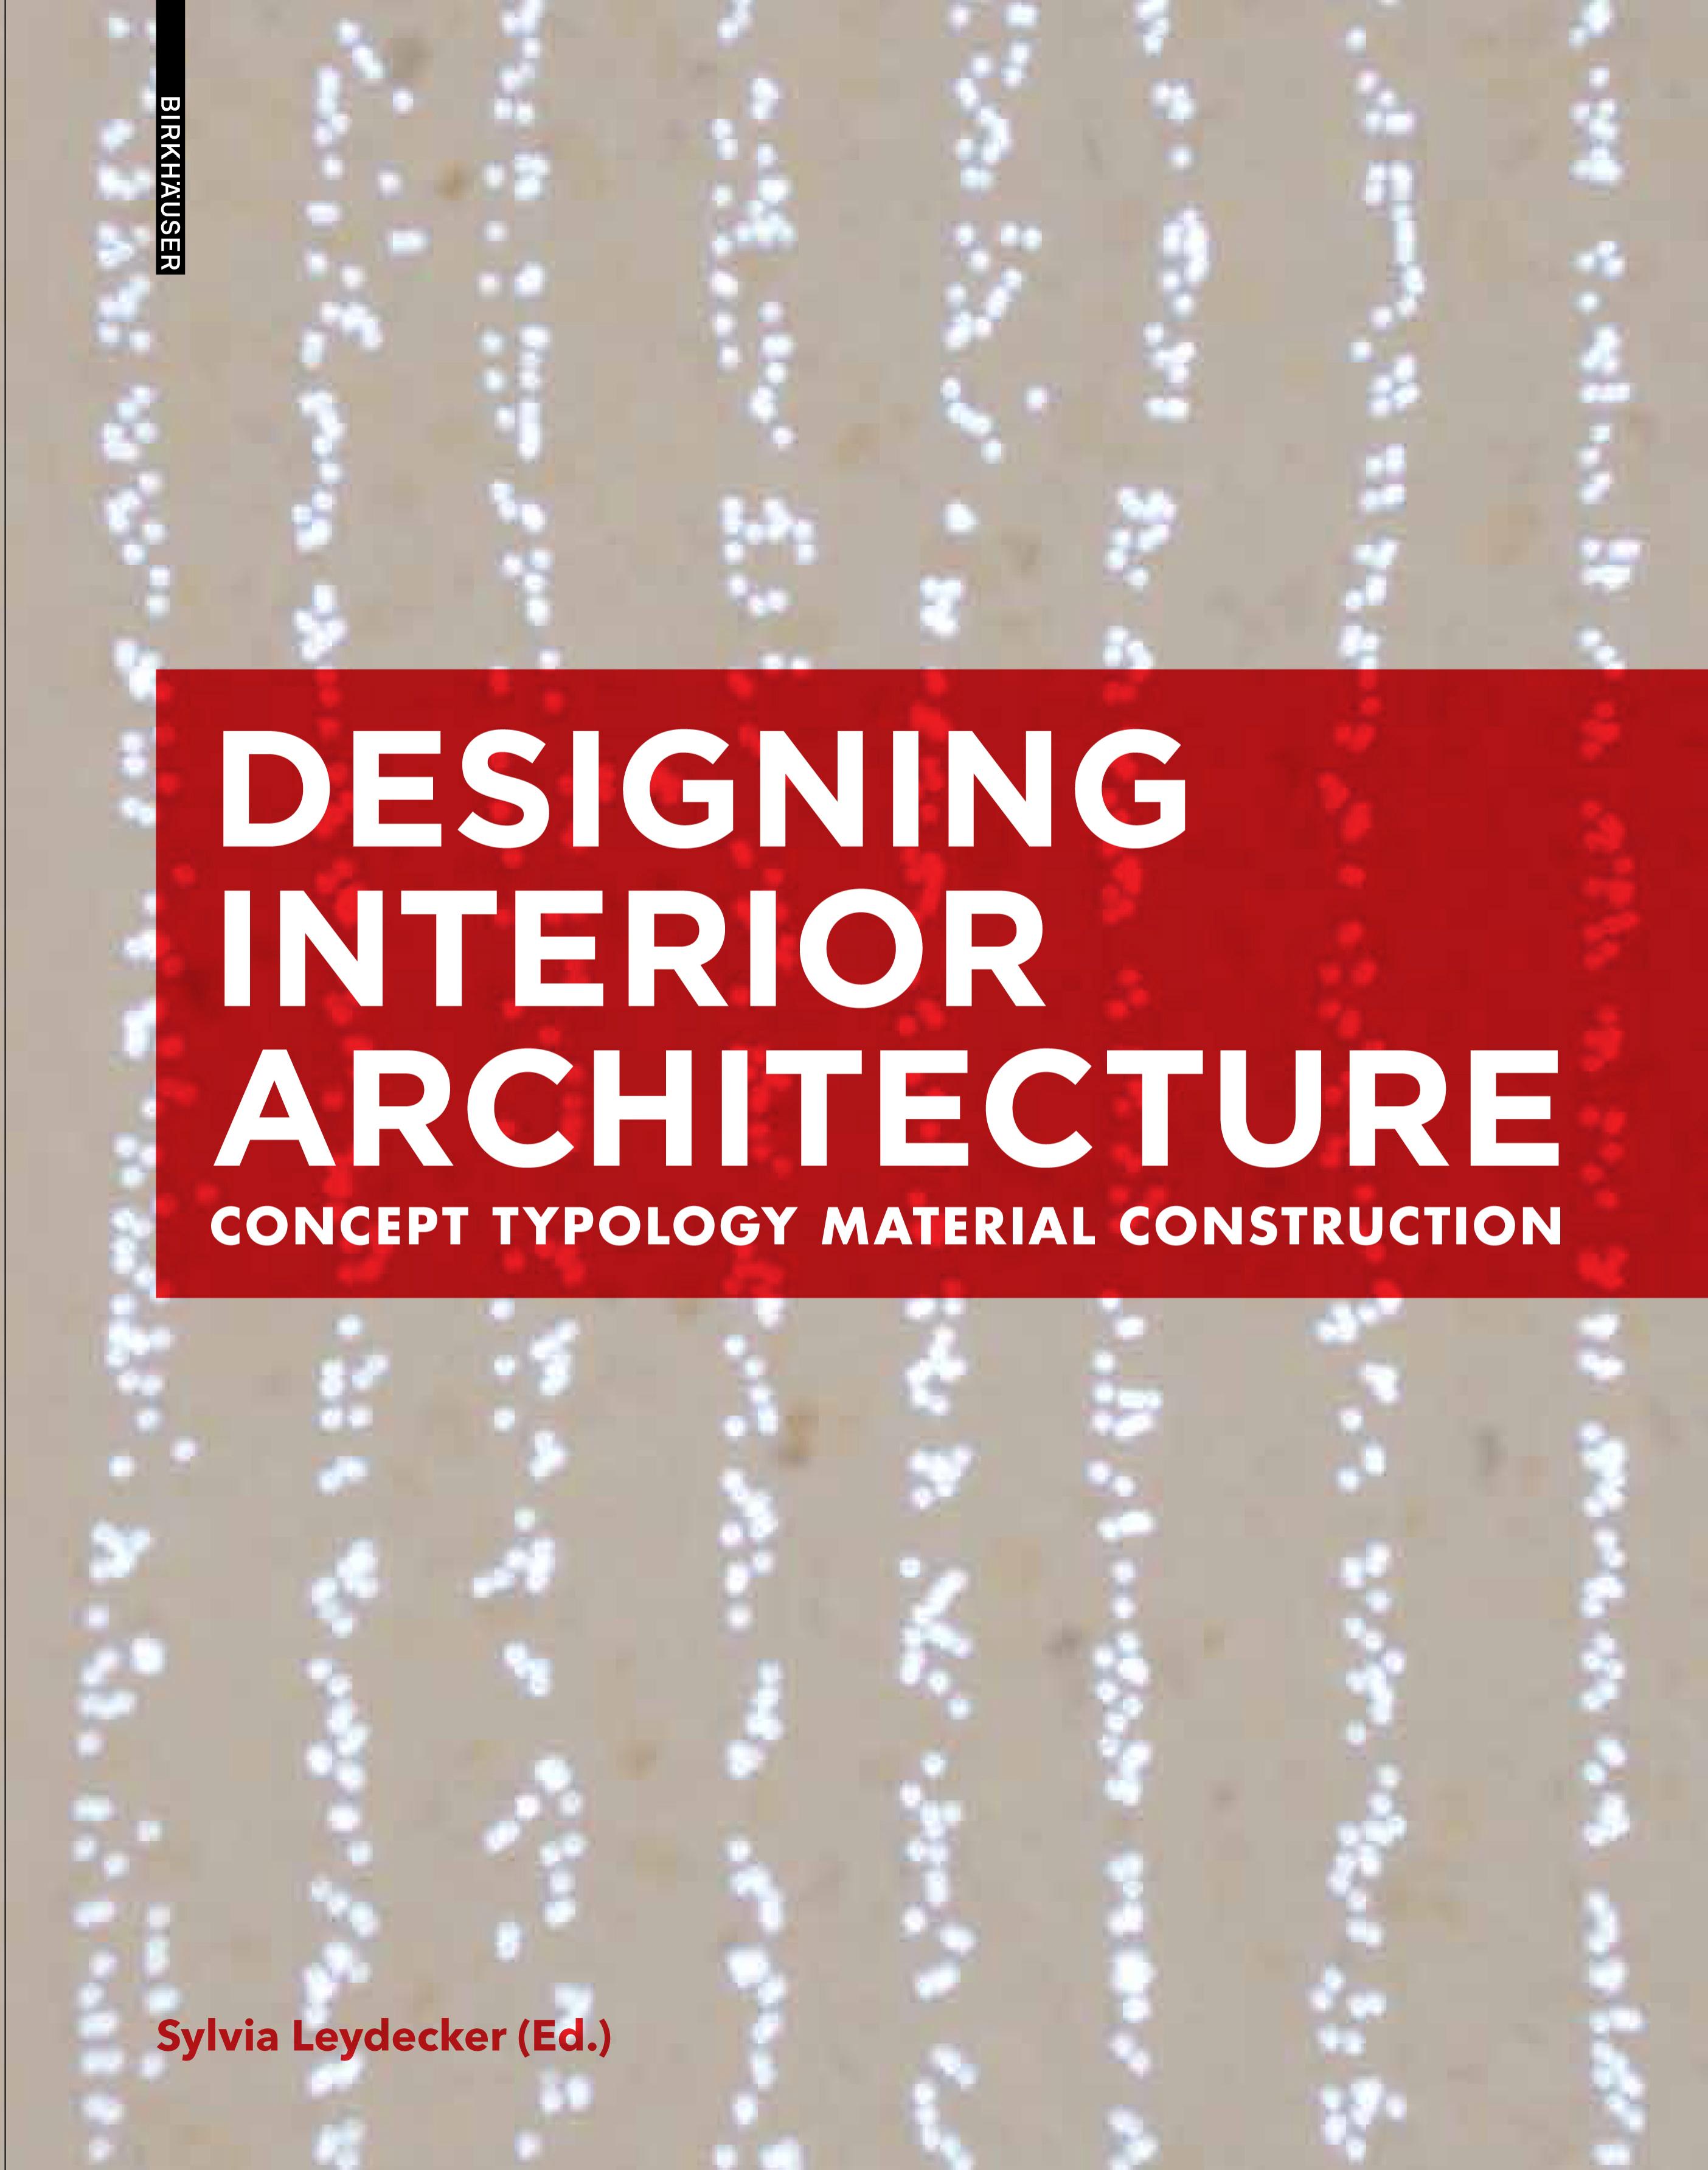 Designing Interior Architecture / Thiết kế kiến trúc nội thất